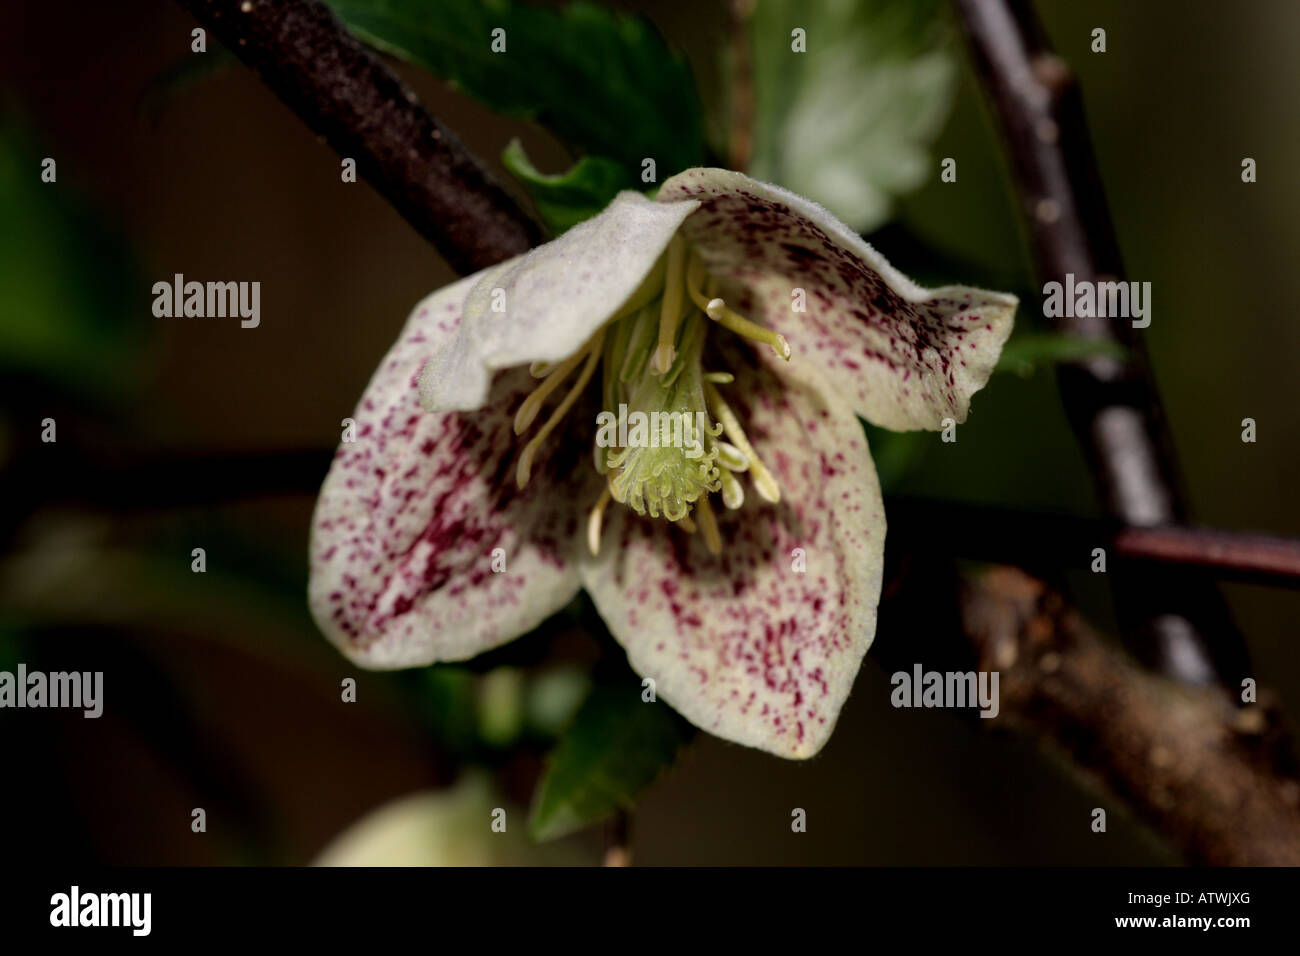 WINTER FLOWERING CLEMATIS (Clematis cirrhosa) Stock Photo